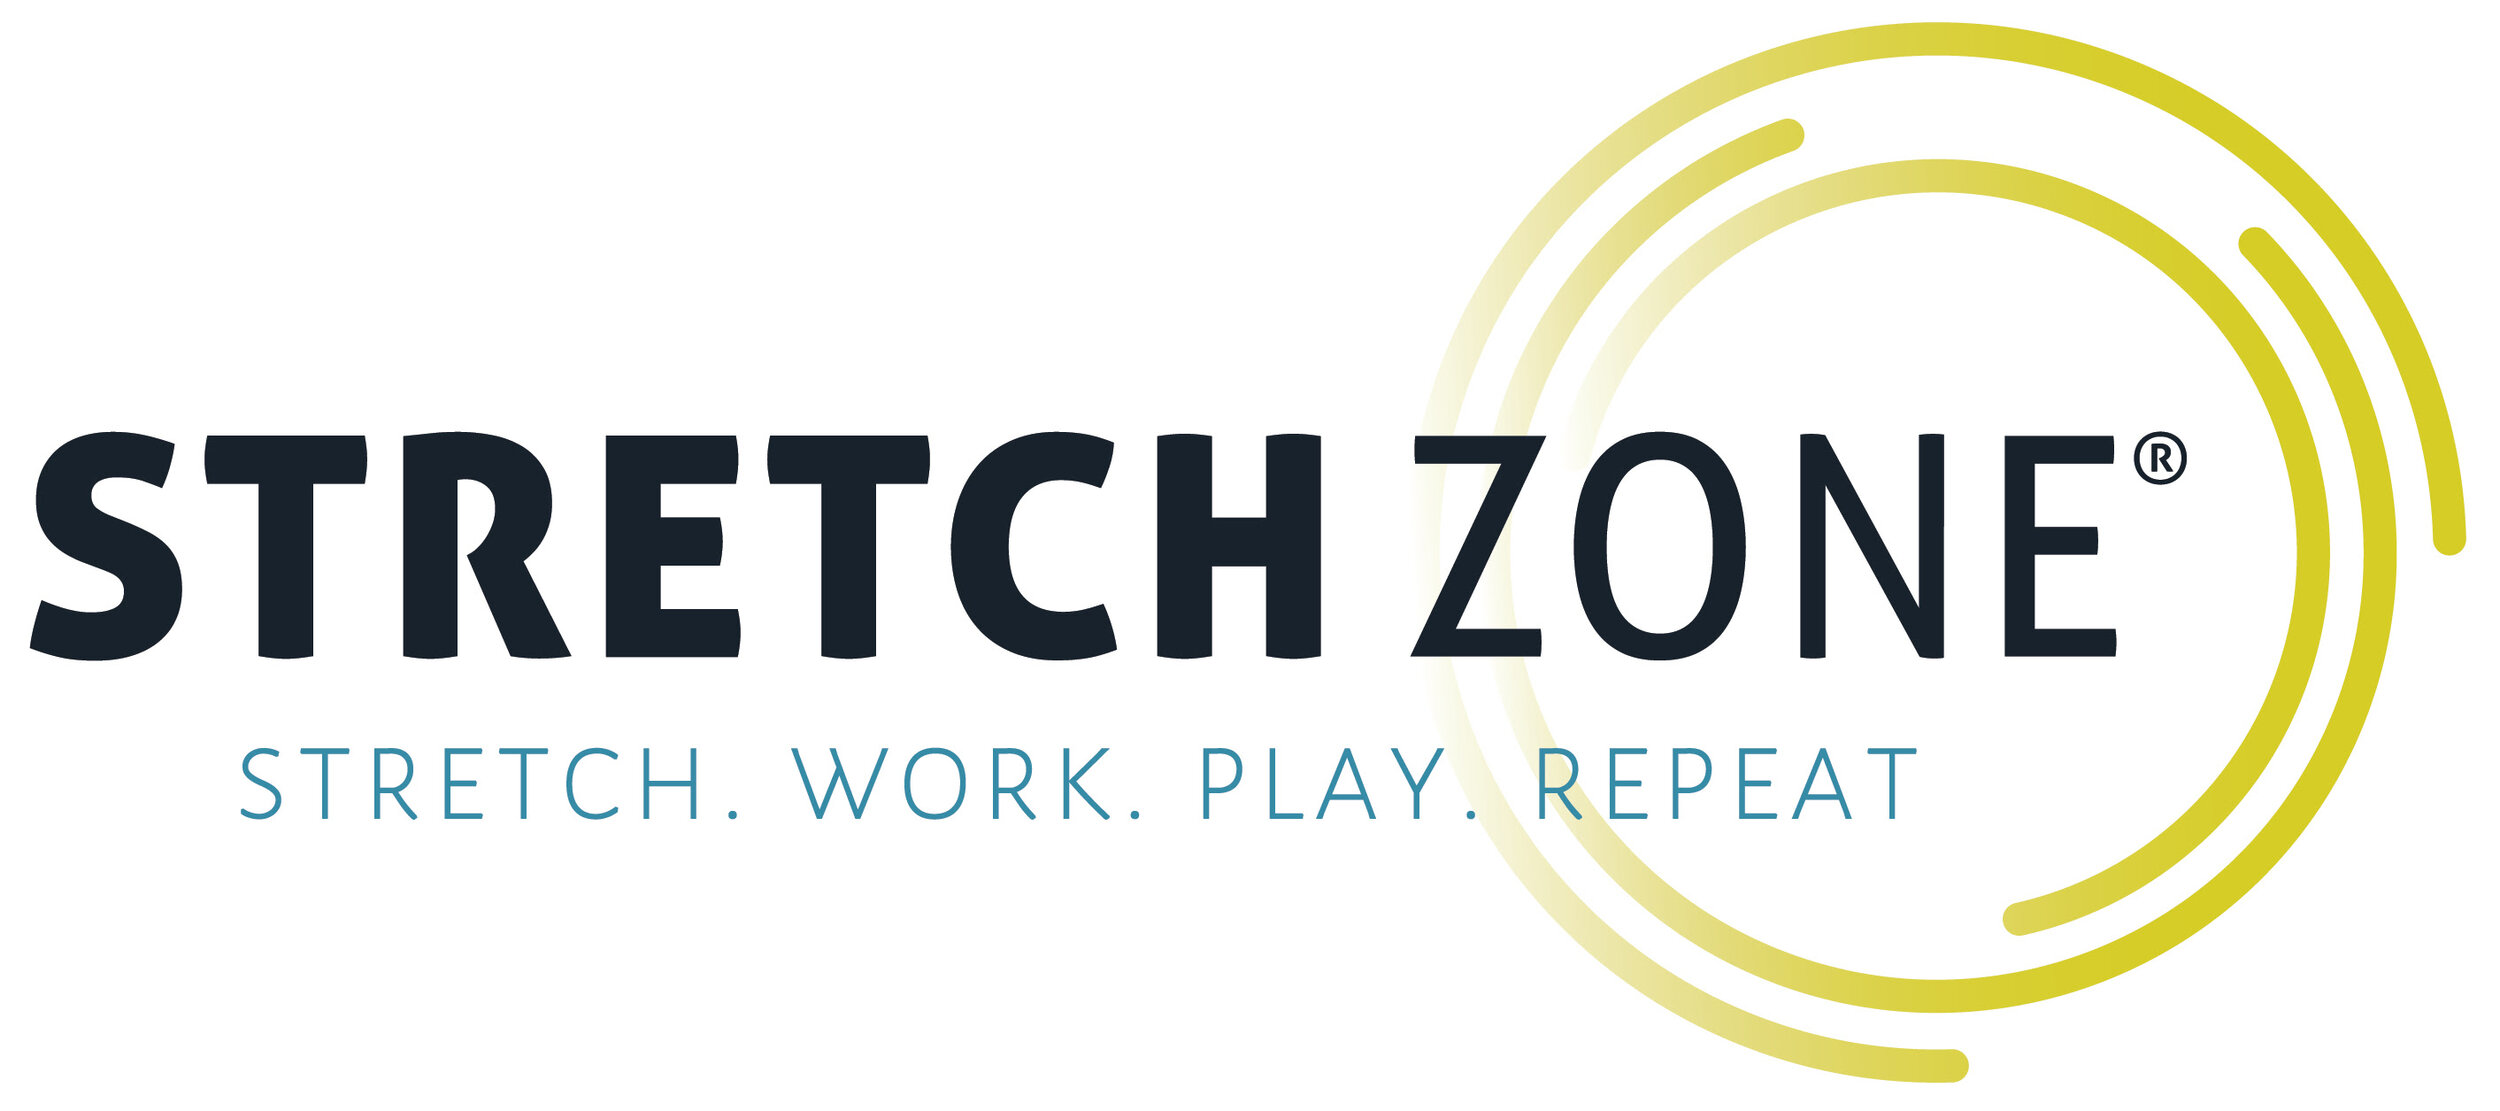 stretch zone logo.jpg